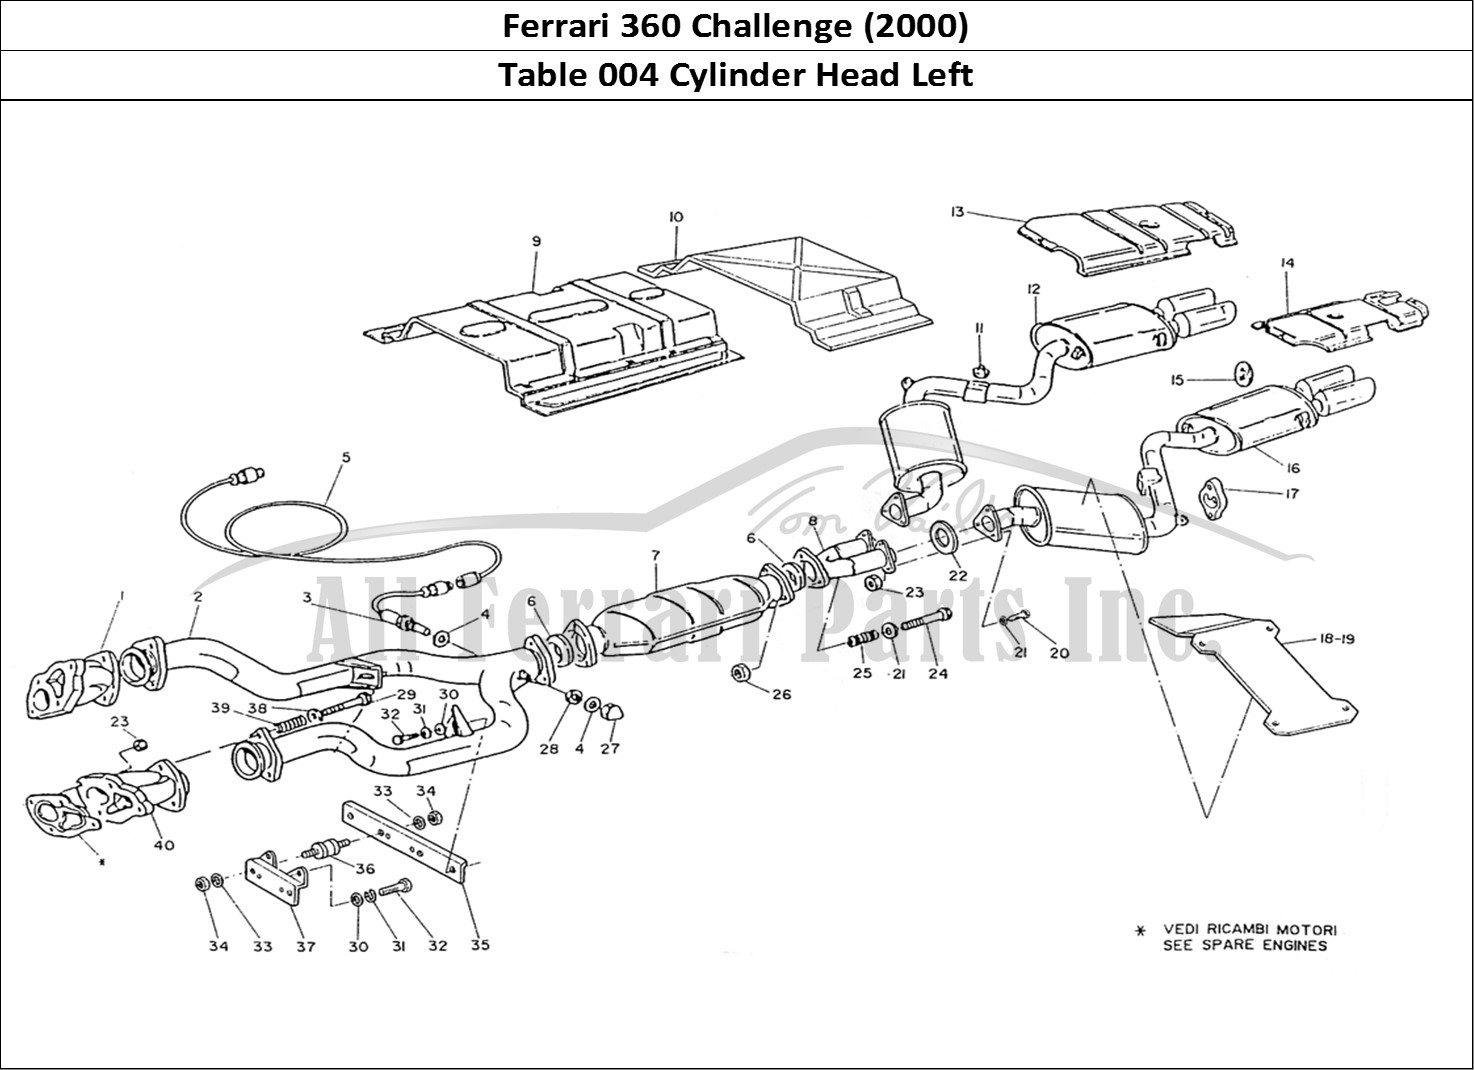 Ferrari Parts Ferrari 360 Challenge (2000) Page 004 L.H. Cylinder Head